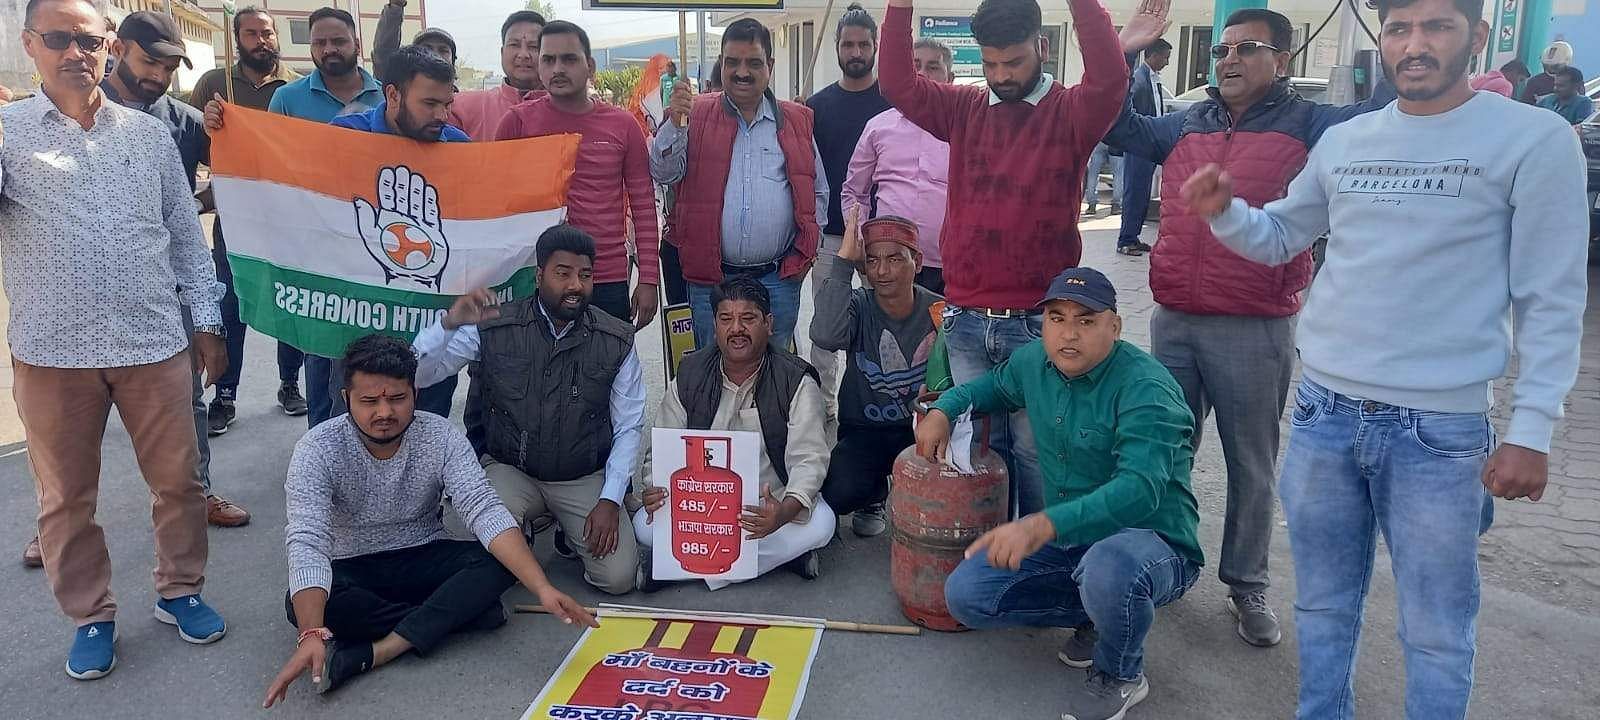   Anggota Kongres memprotes pompa bensin di Dhalwala.